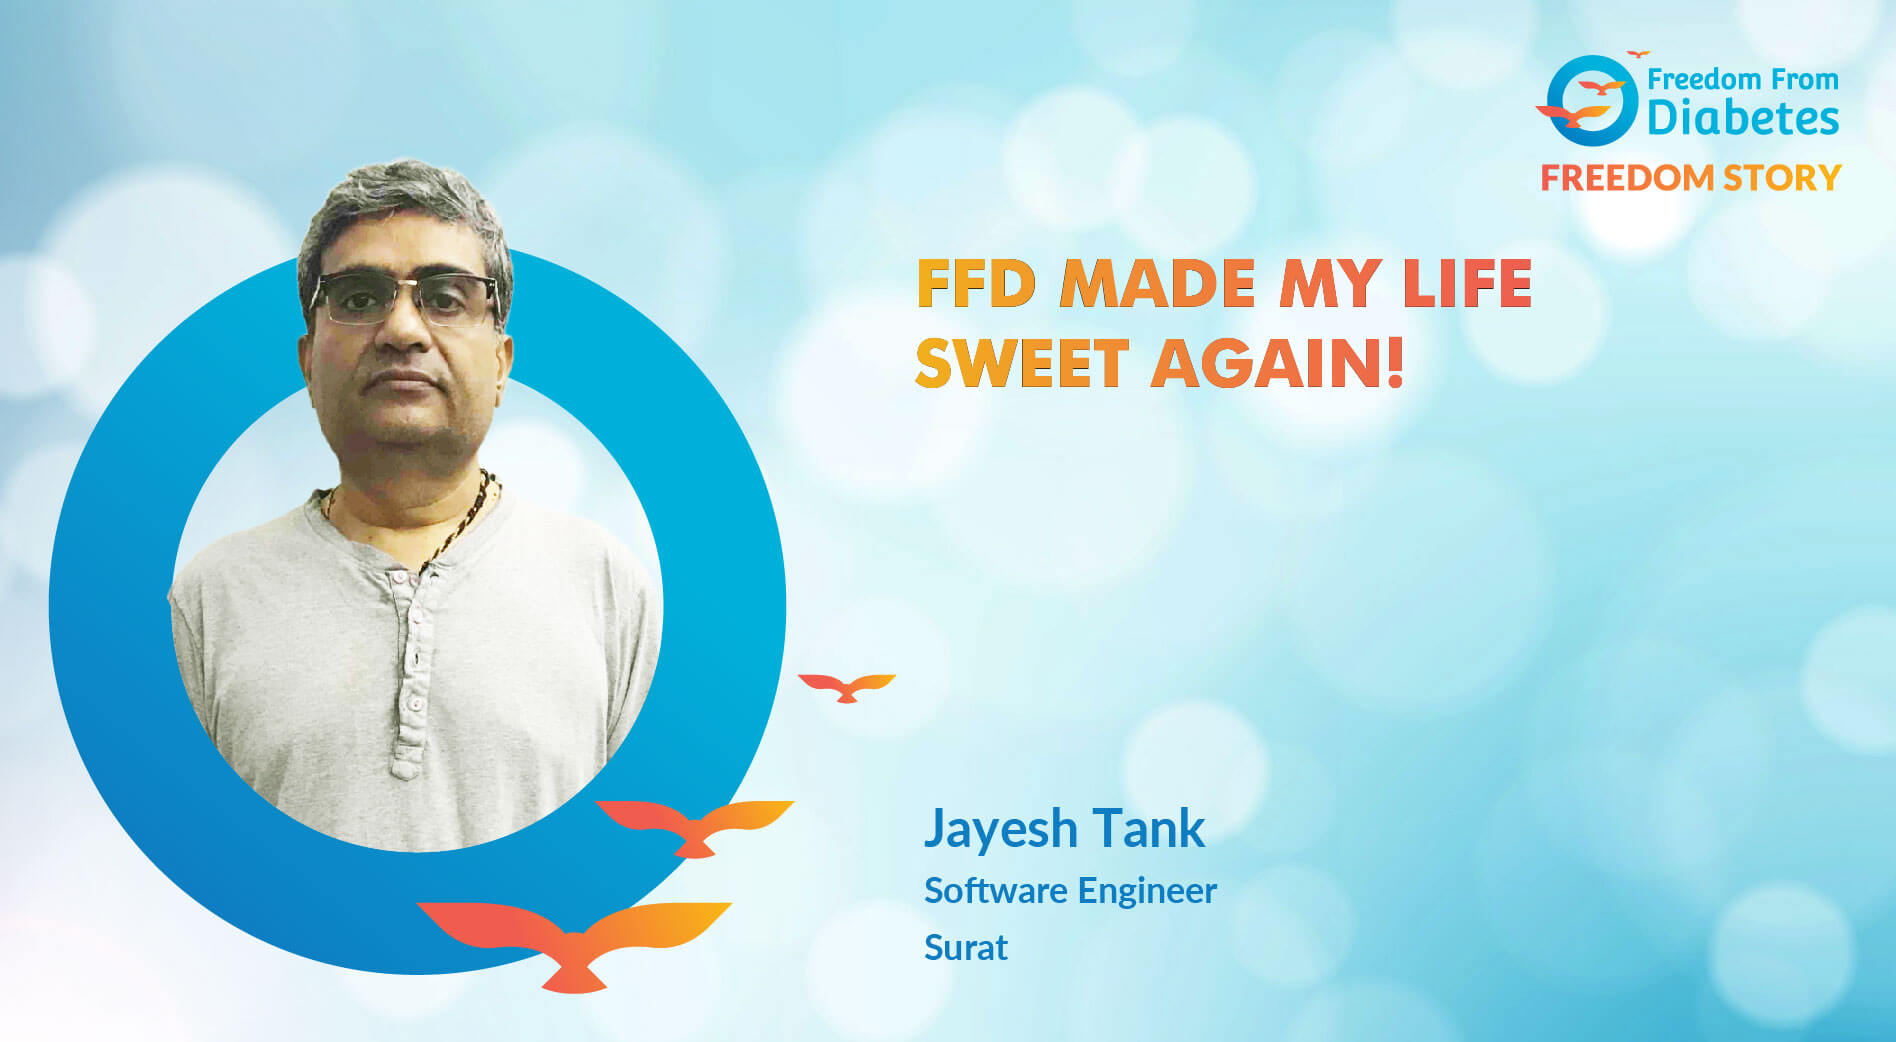 Jayesh Tank: FFD made my life sweet again!